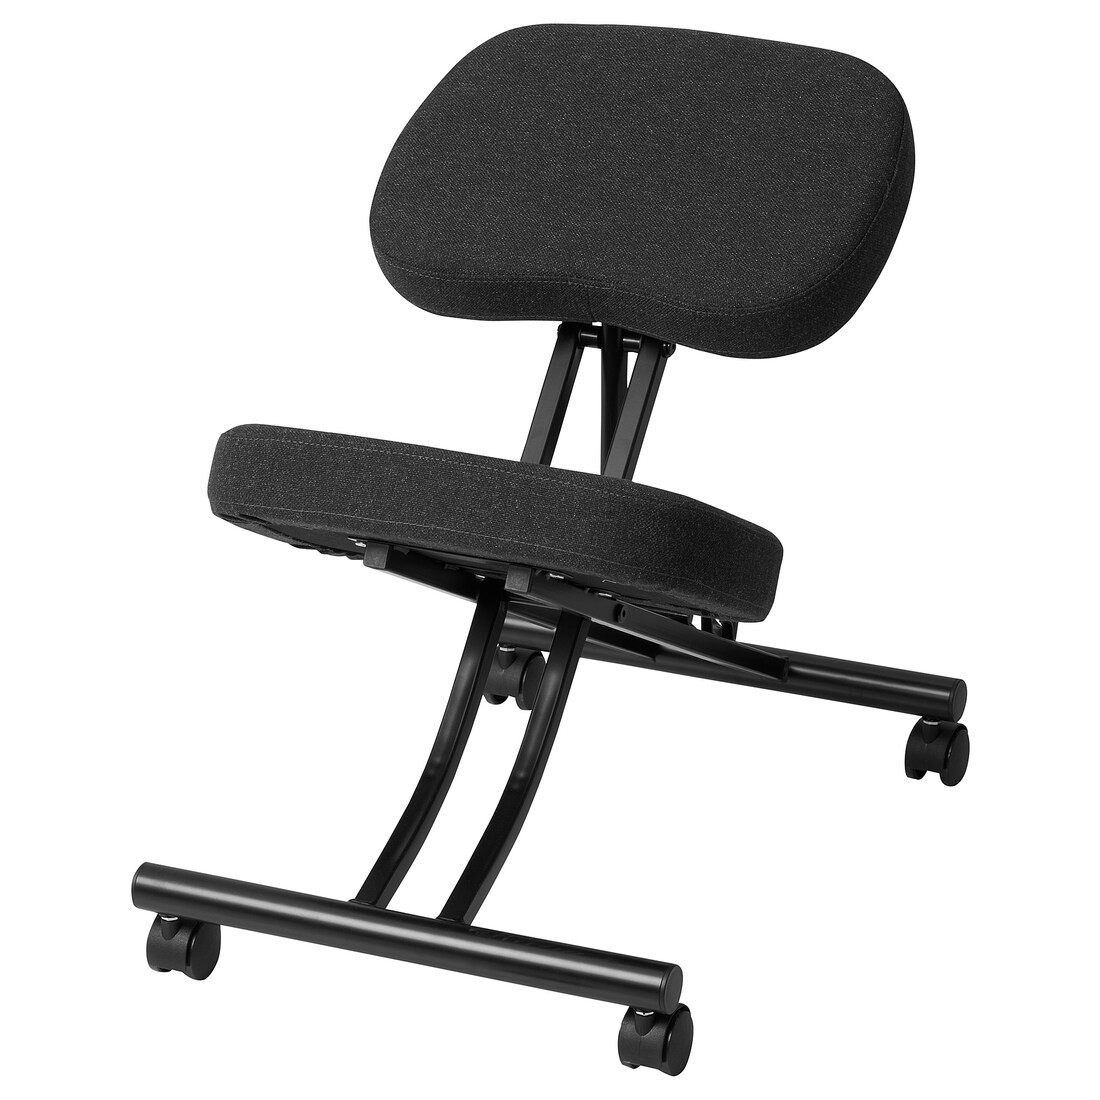 EIFRED Ортопедическое кресло, Gunnared черно-серый